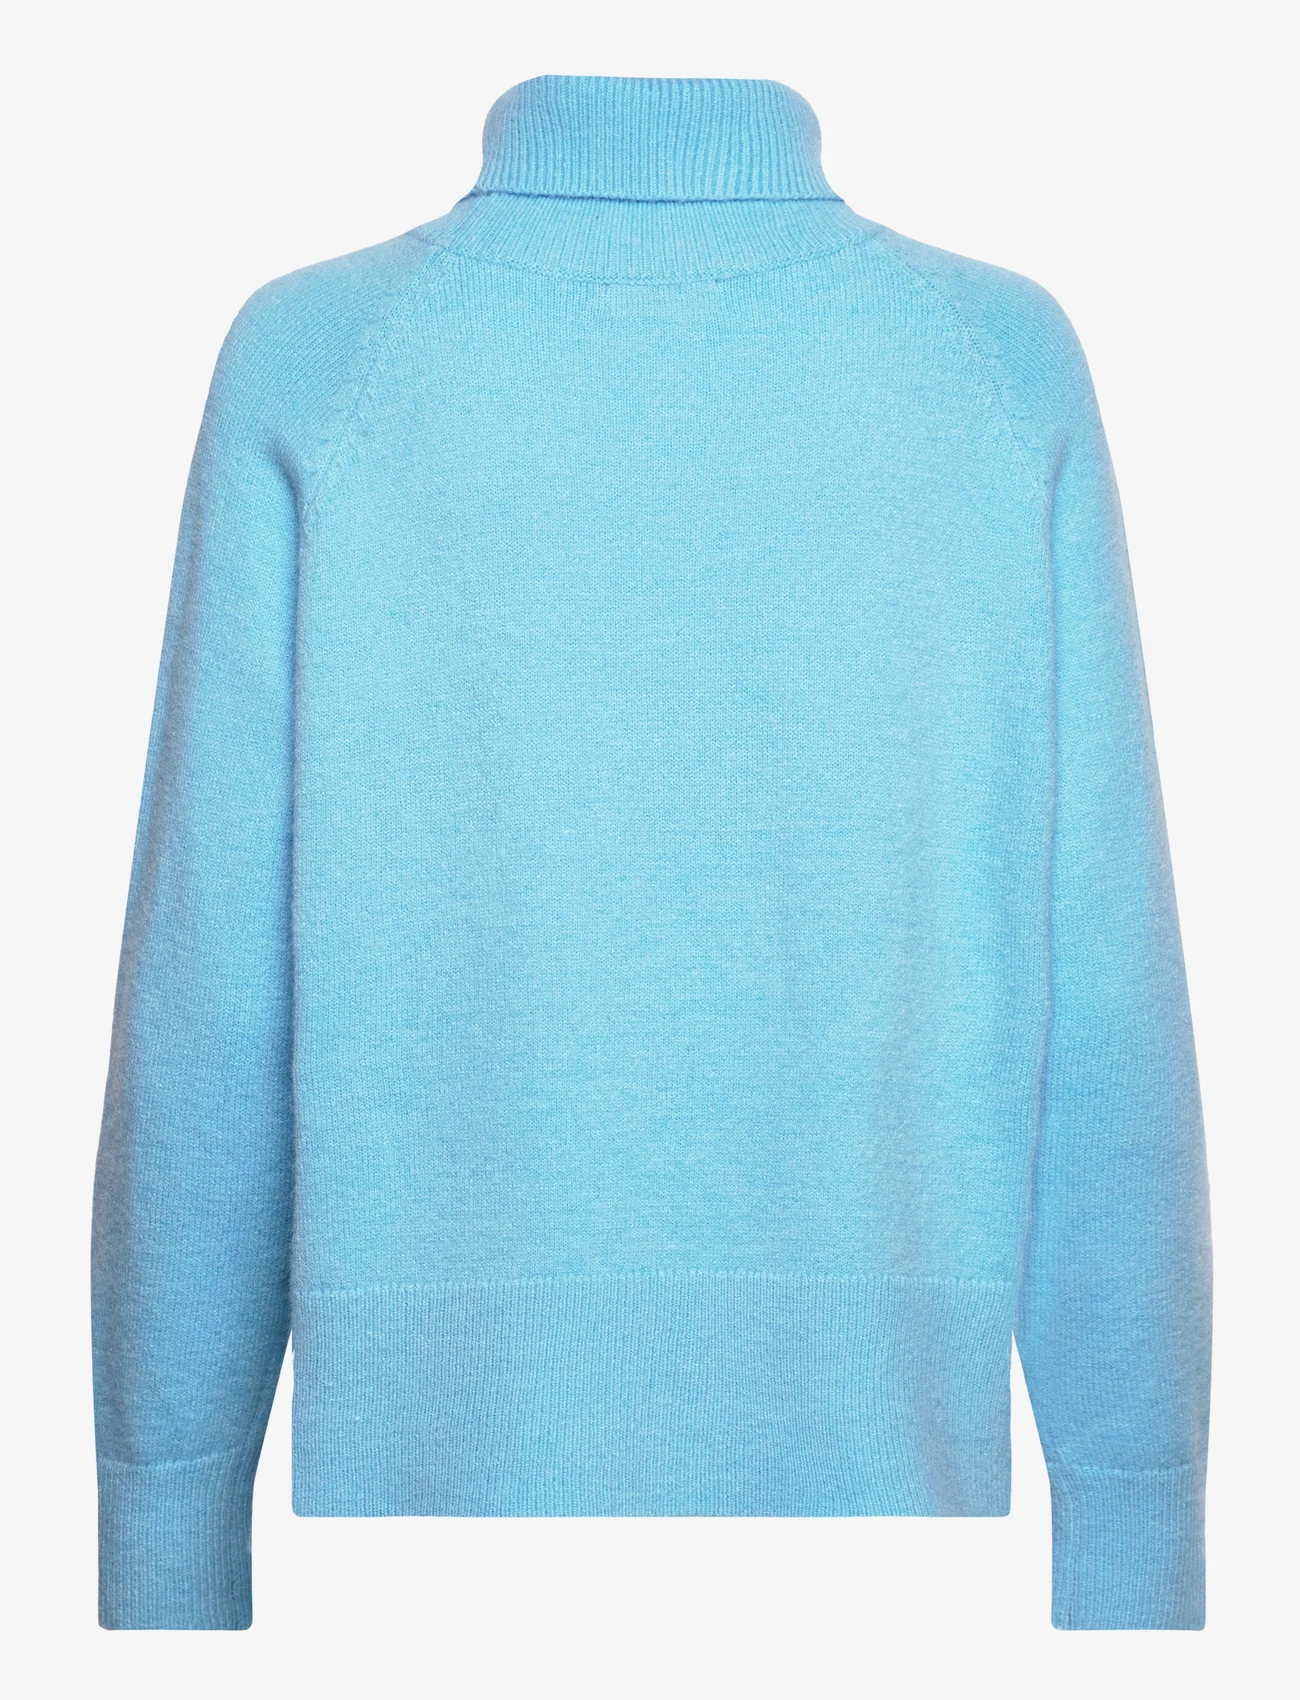 Coster Copenhagen - Sweater with high neck - megztiniai su aukšta apykakle - coastal blue - 1